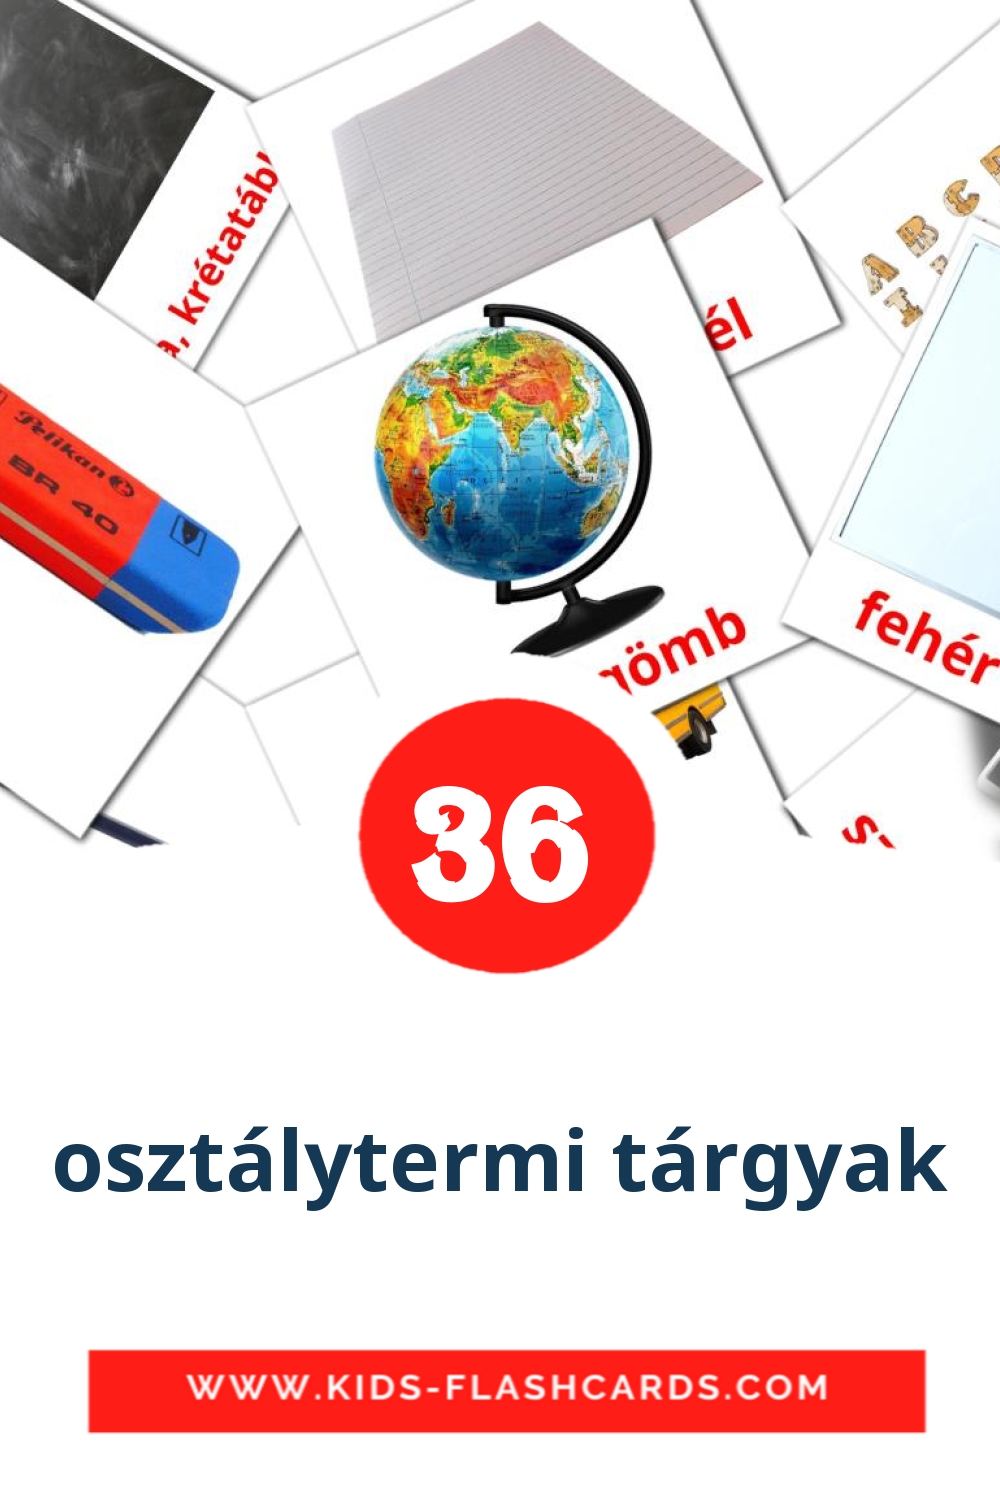 36 carte illustrate di osztálytermi tárgyak per la scuola materna in ungherese